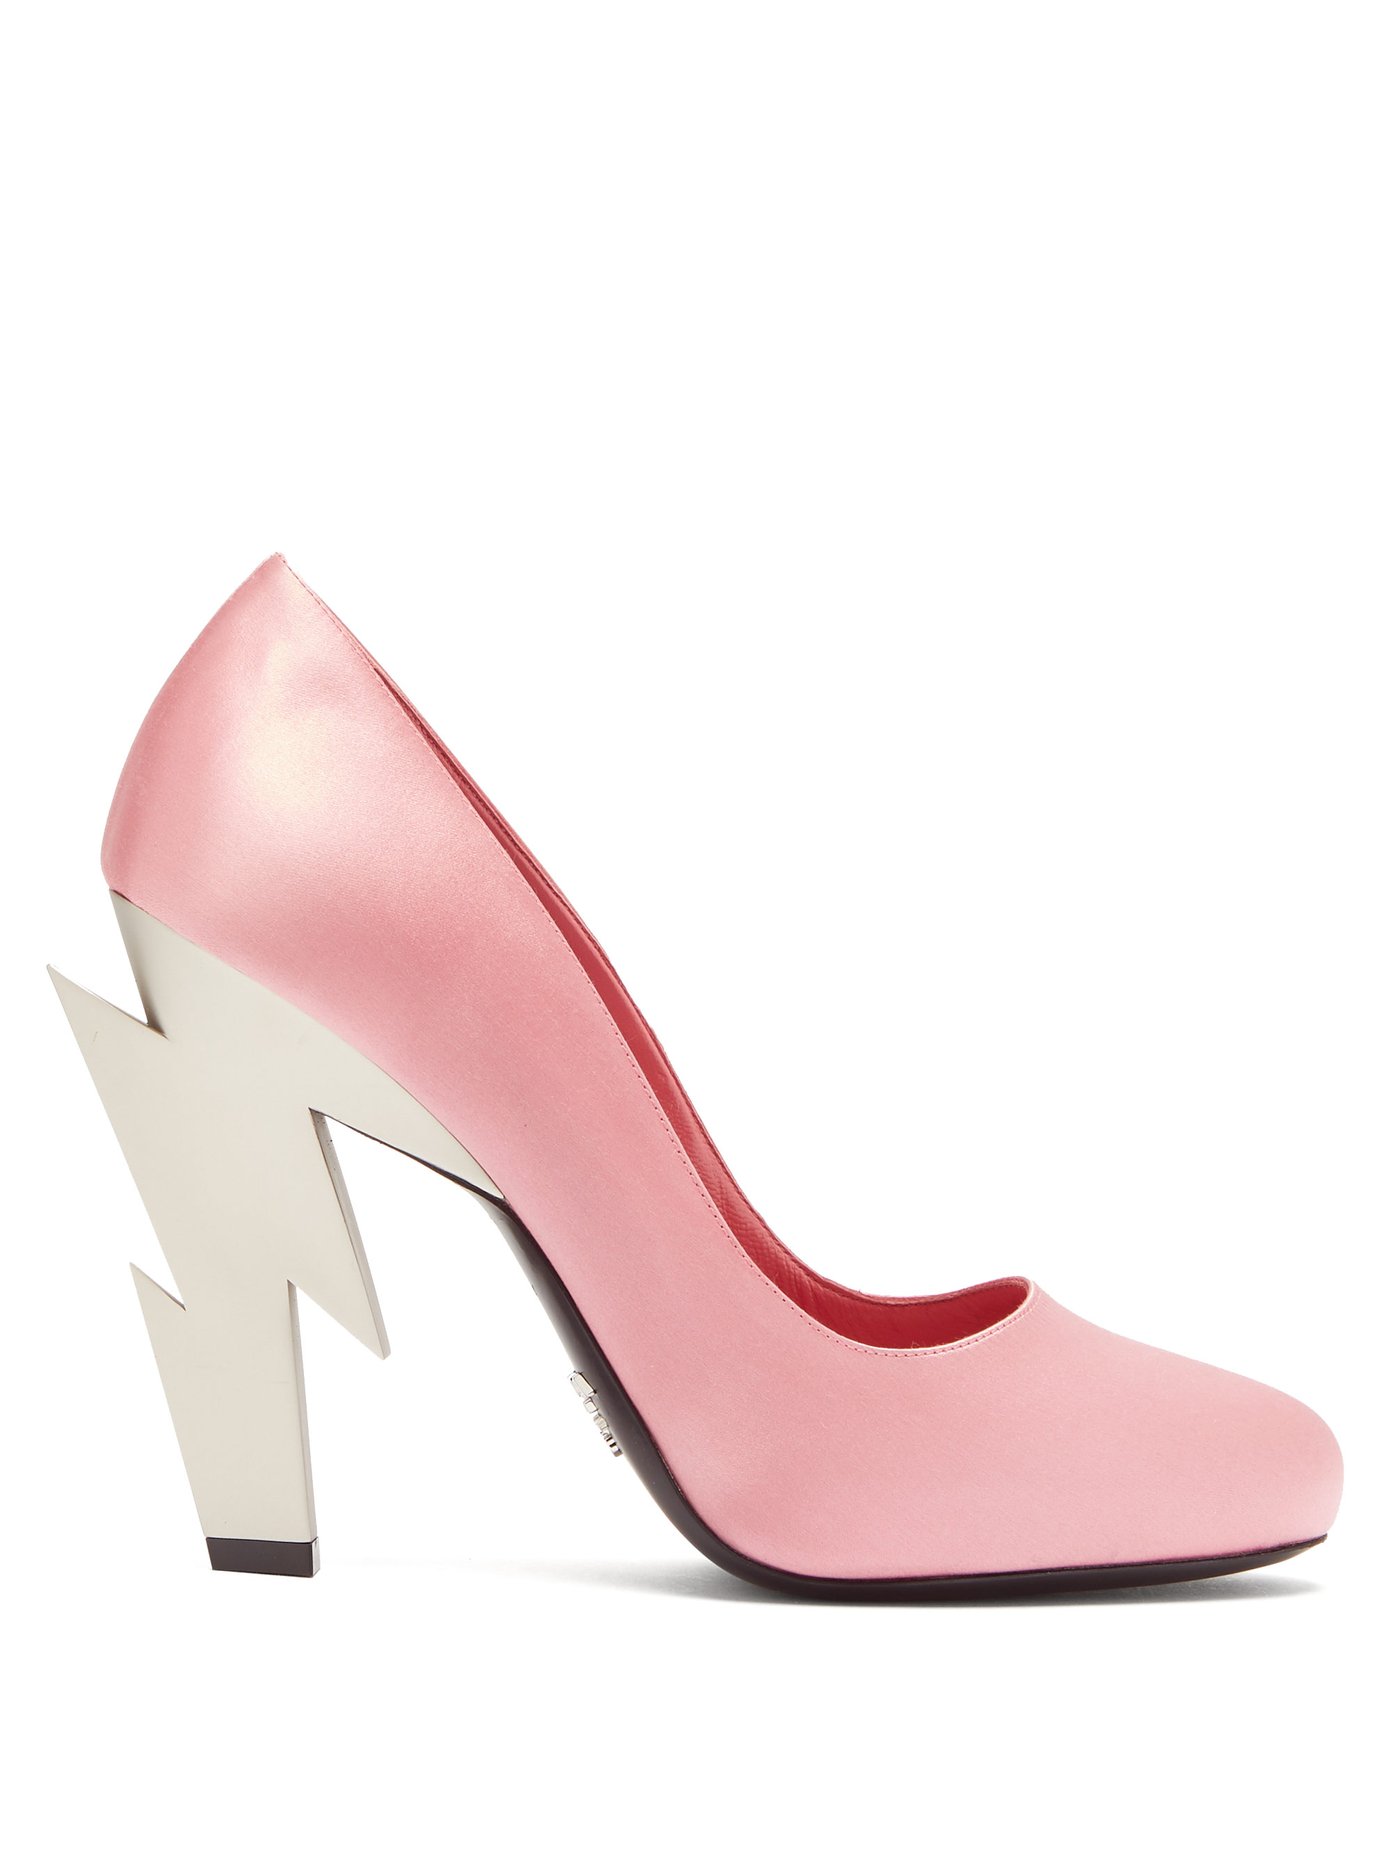 pink prada heels